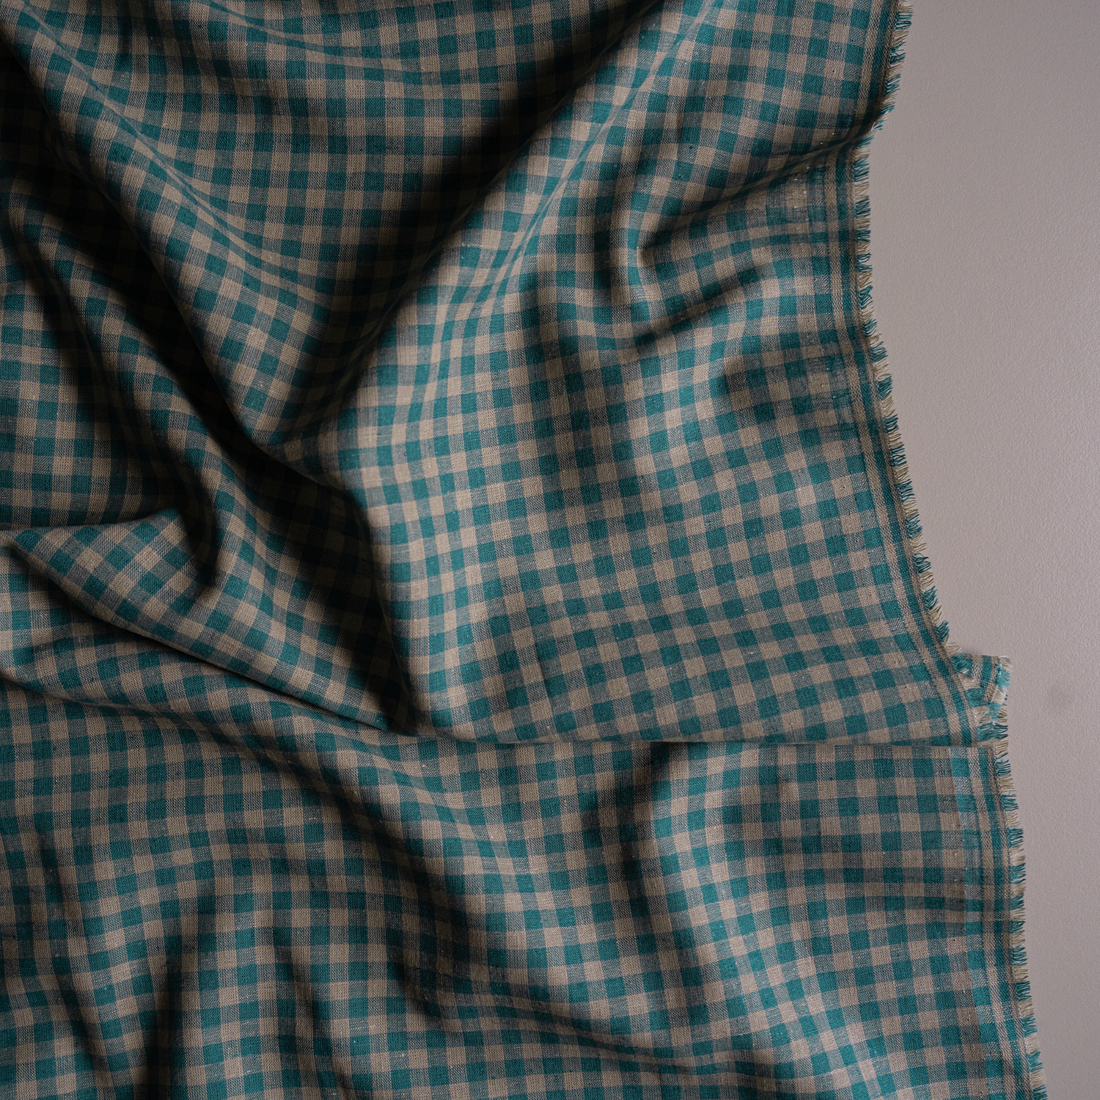 Maria Teal - Cotton/Linen Fabric